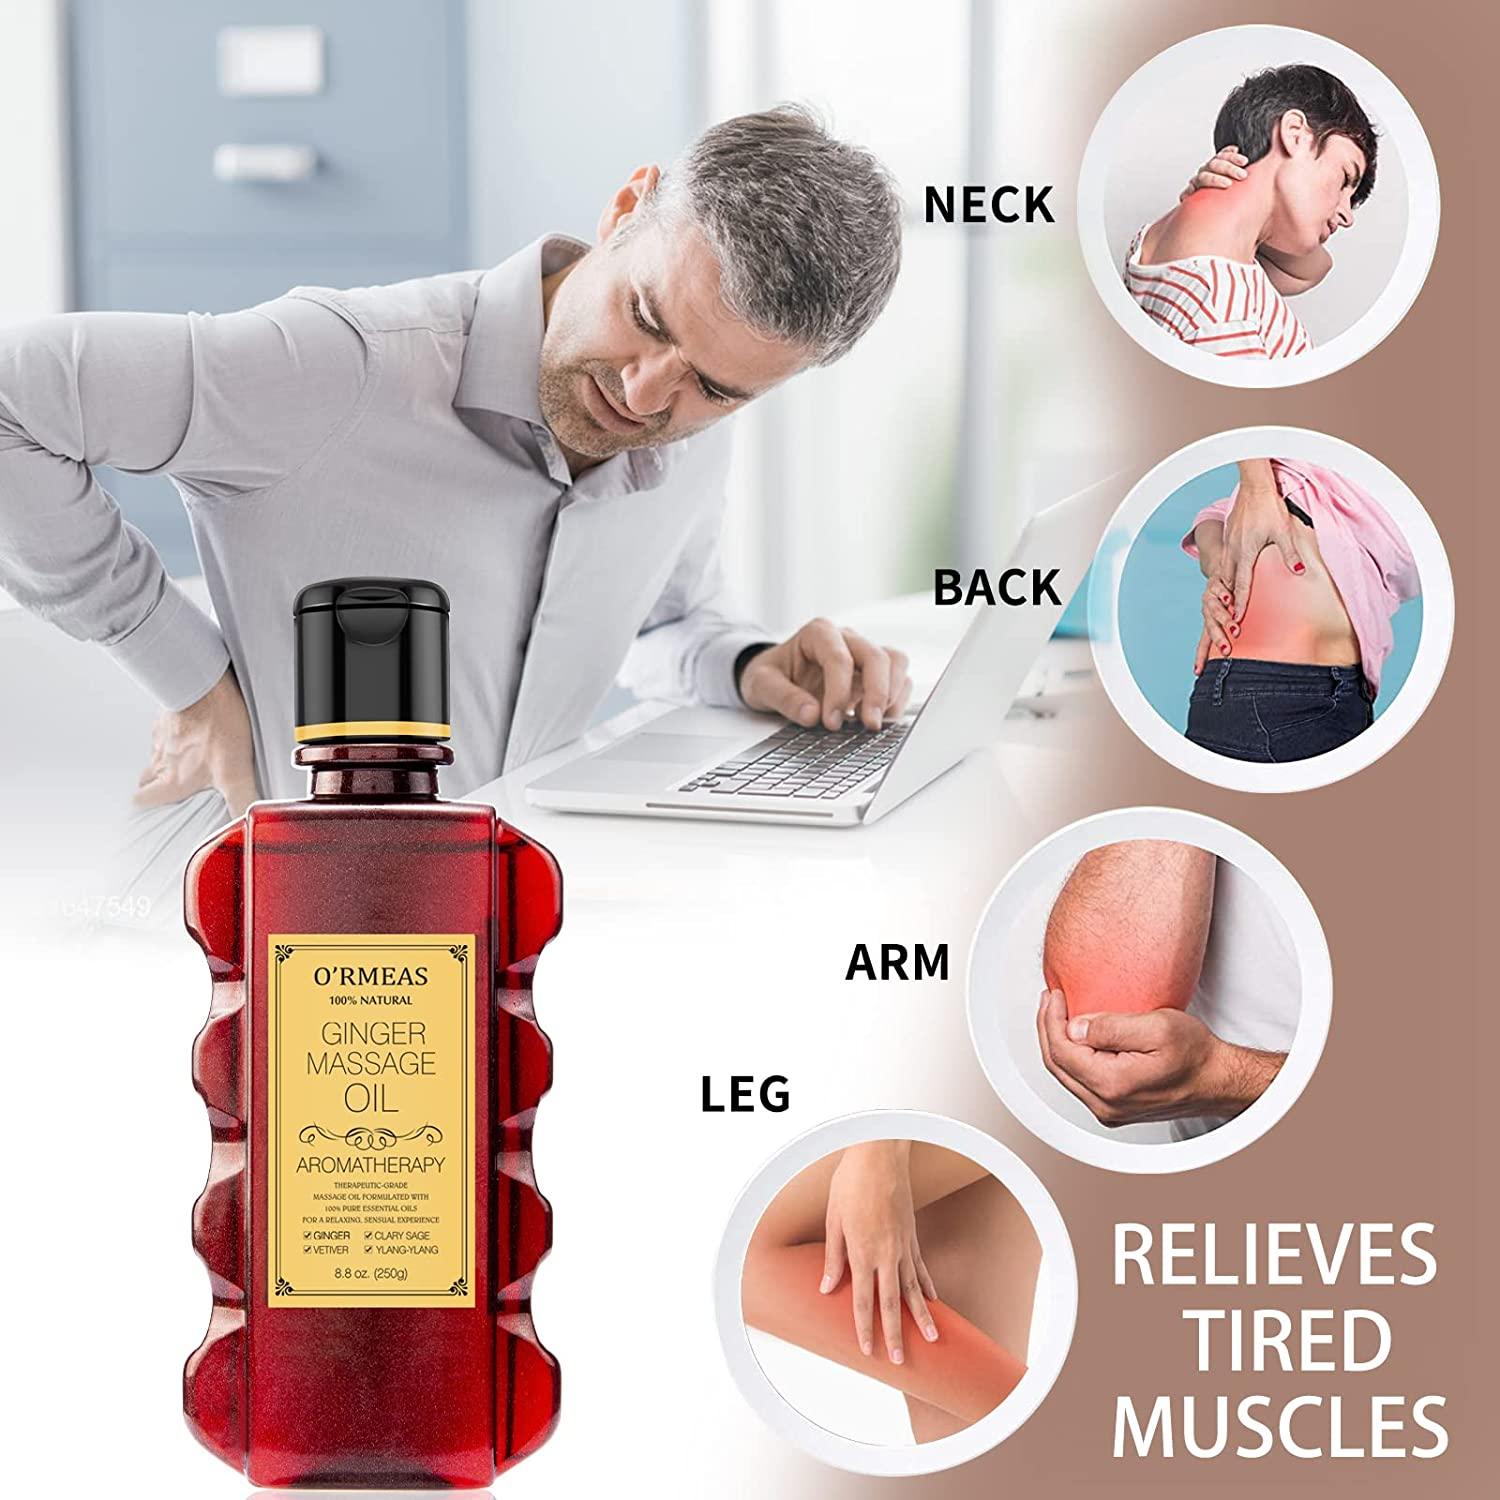 Men's Massage Essential Oils Men's Strength Maintenance Massage